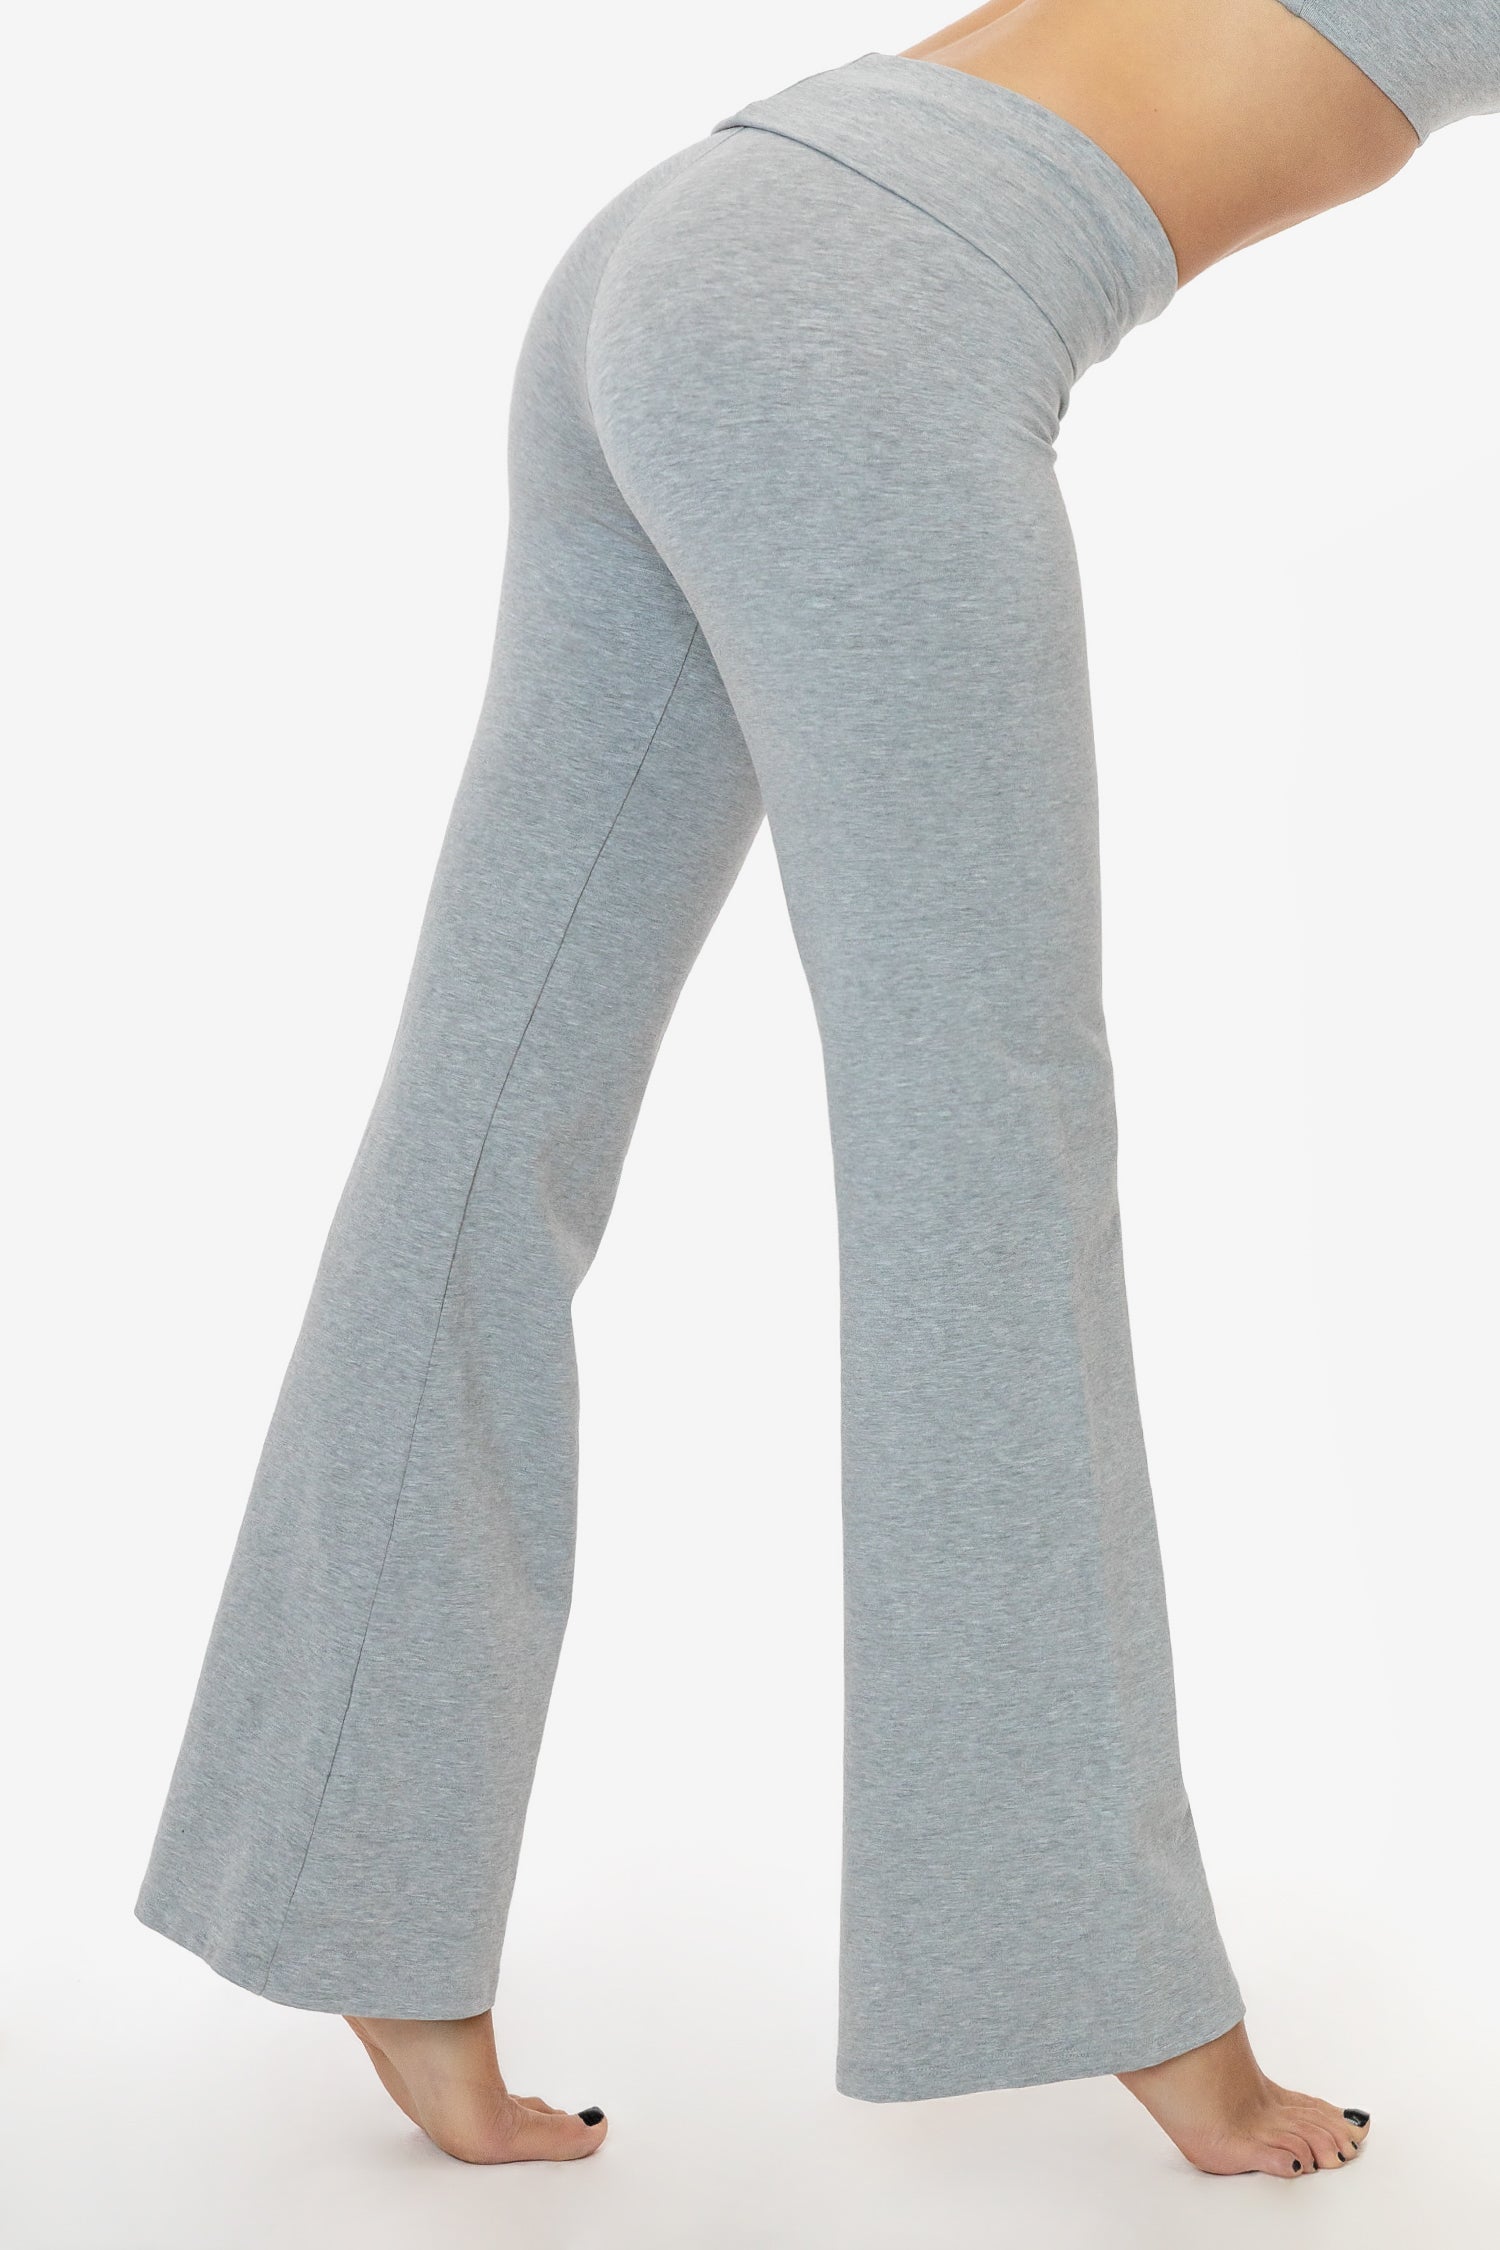 Cotton Spandex Jersey Yoga Pants - American Apparel Style 8300